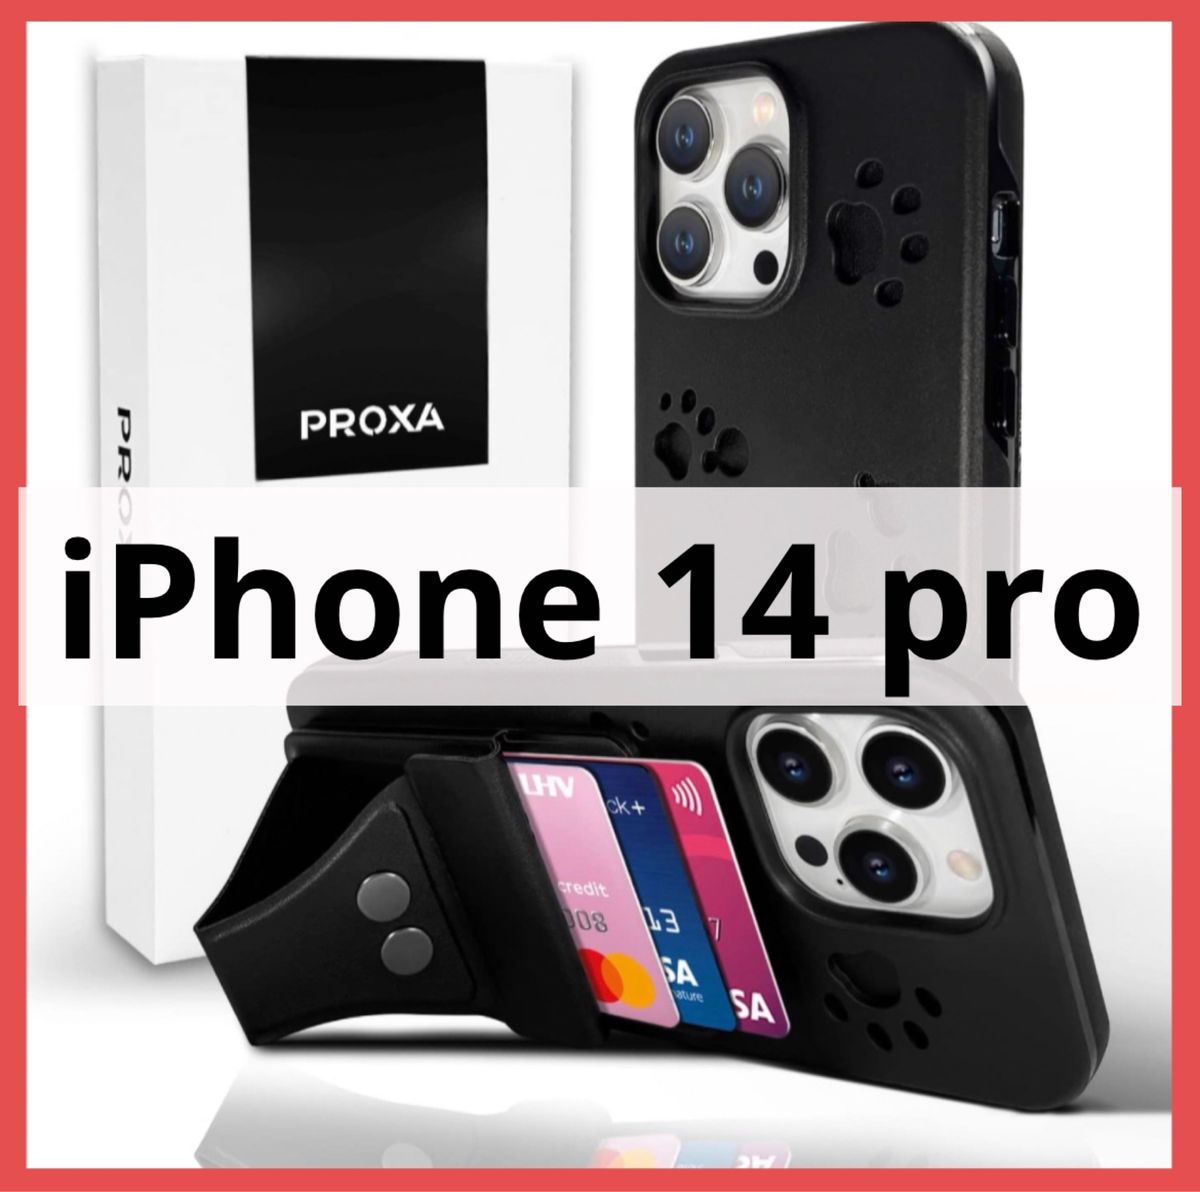 PROXA iPhone 14 pro 用 アクセサリー交換可能 ケース